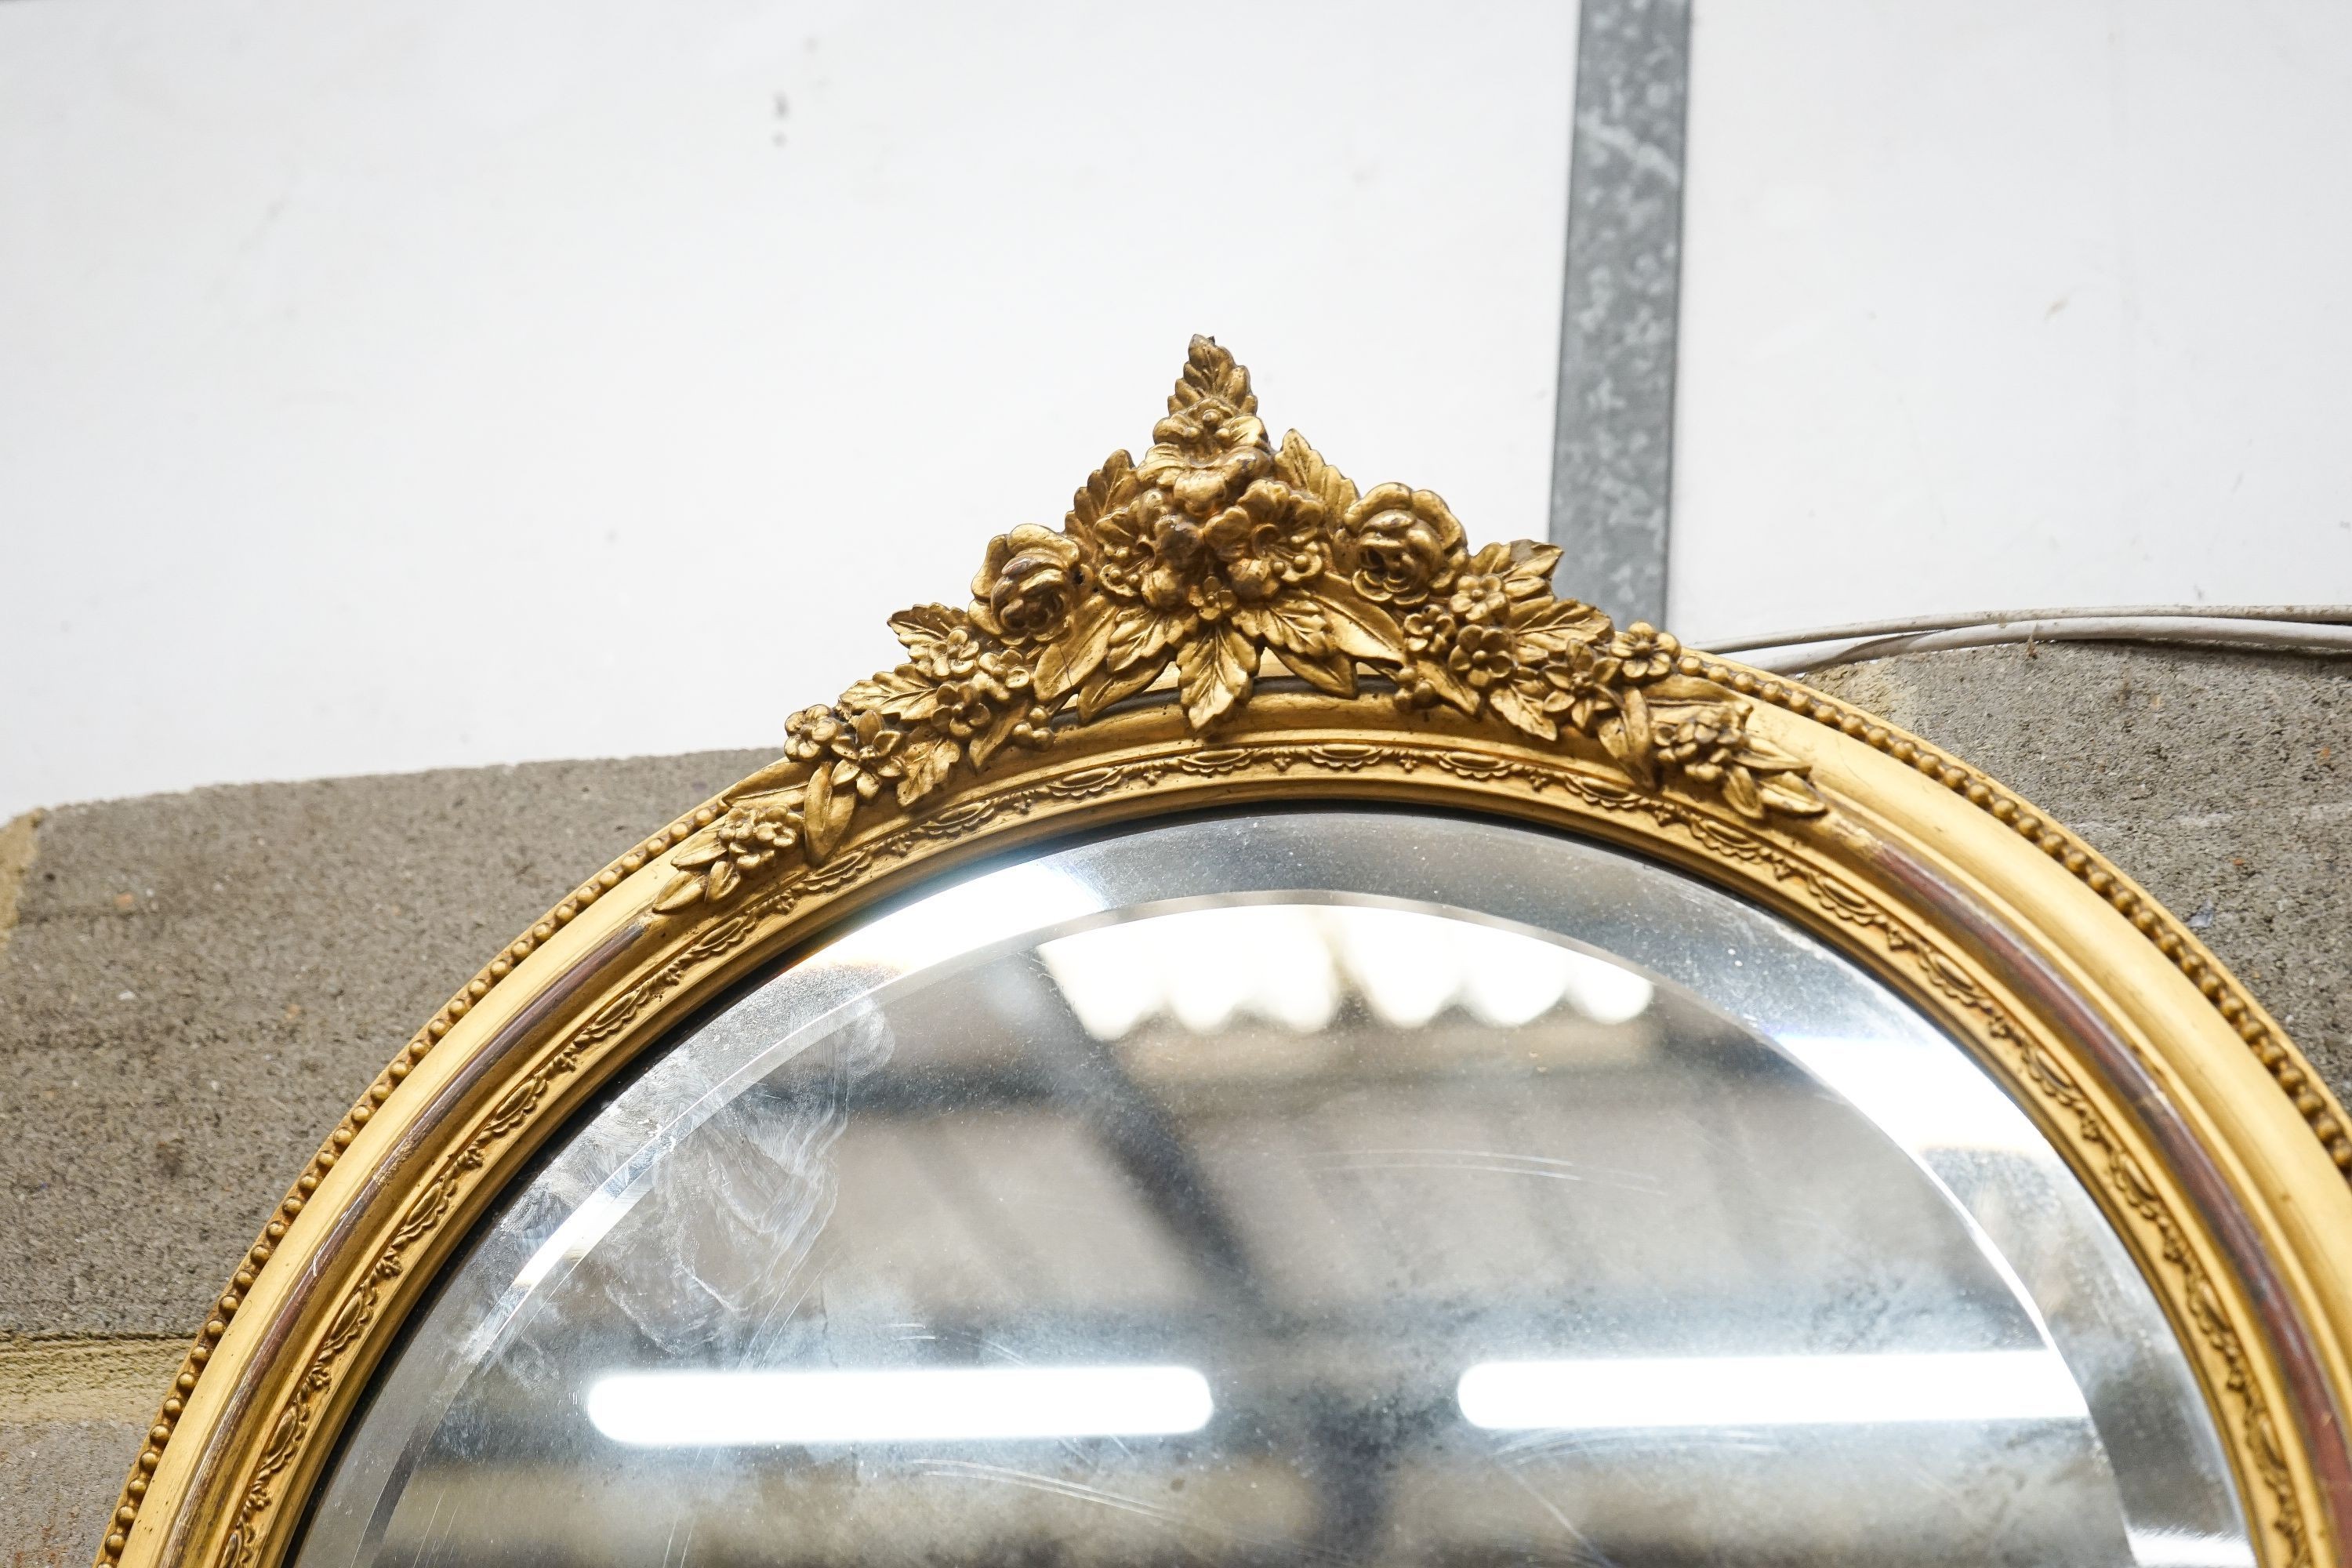 A Victorian circular gilt gesso wall mirror, diameter 48cm